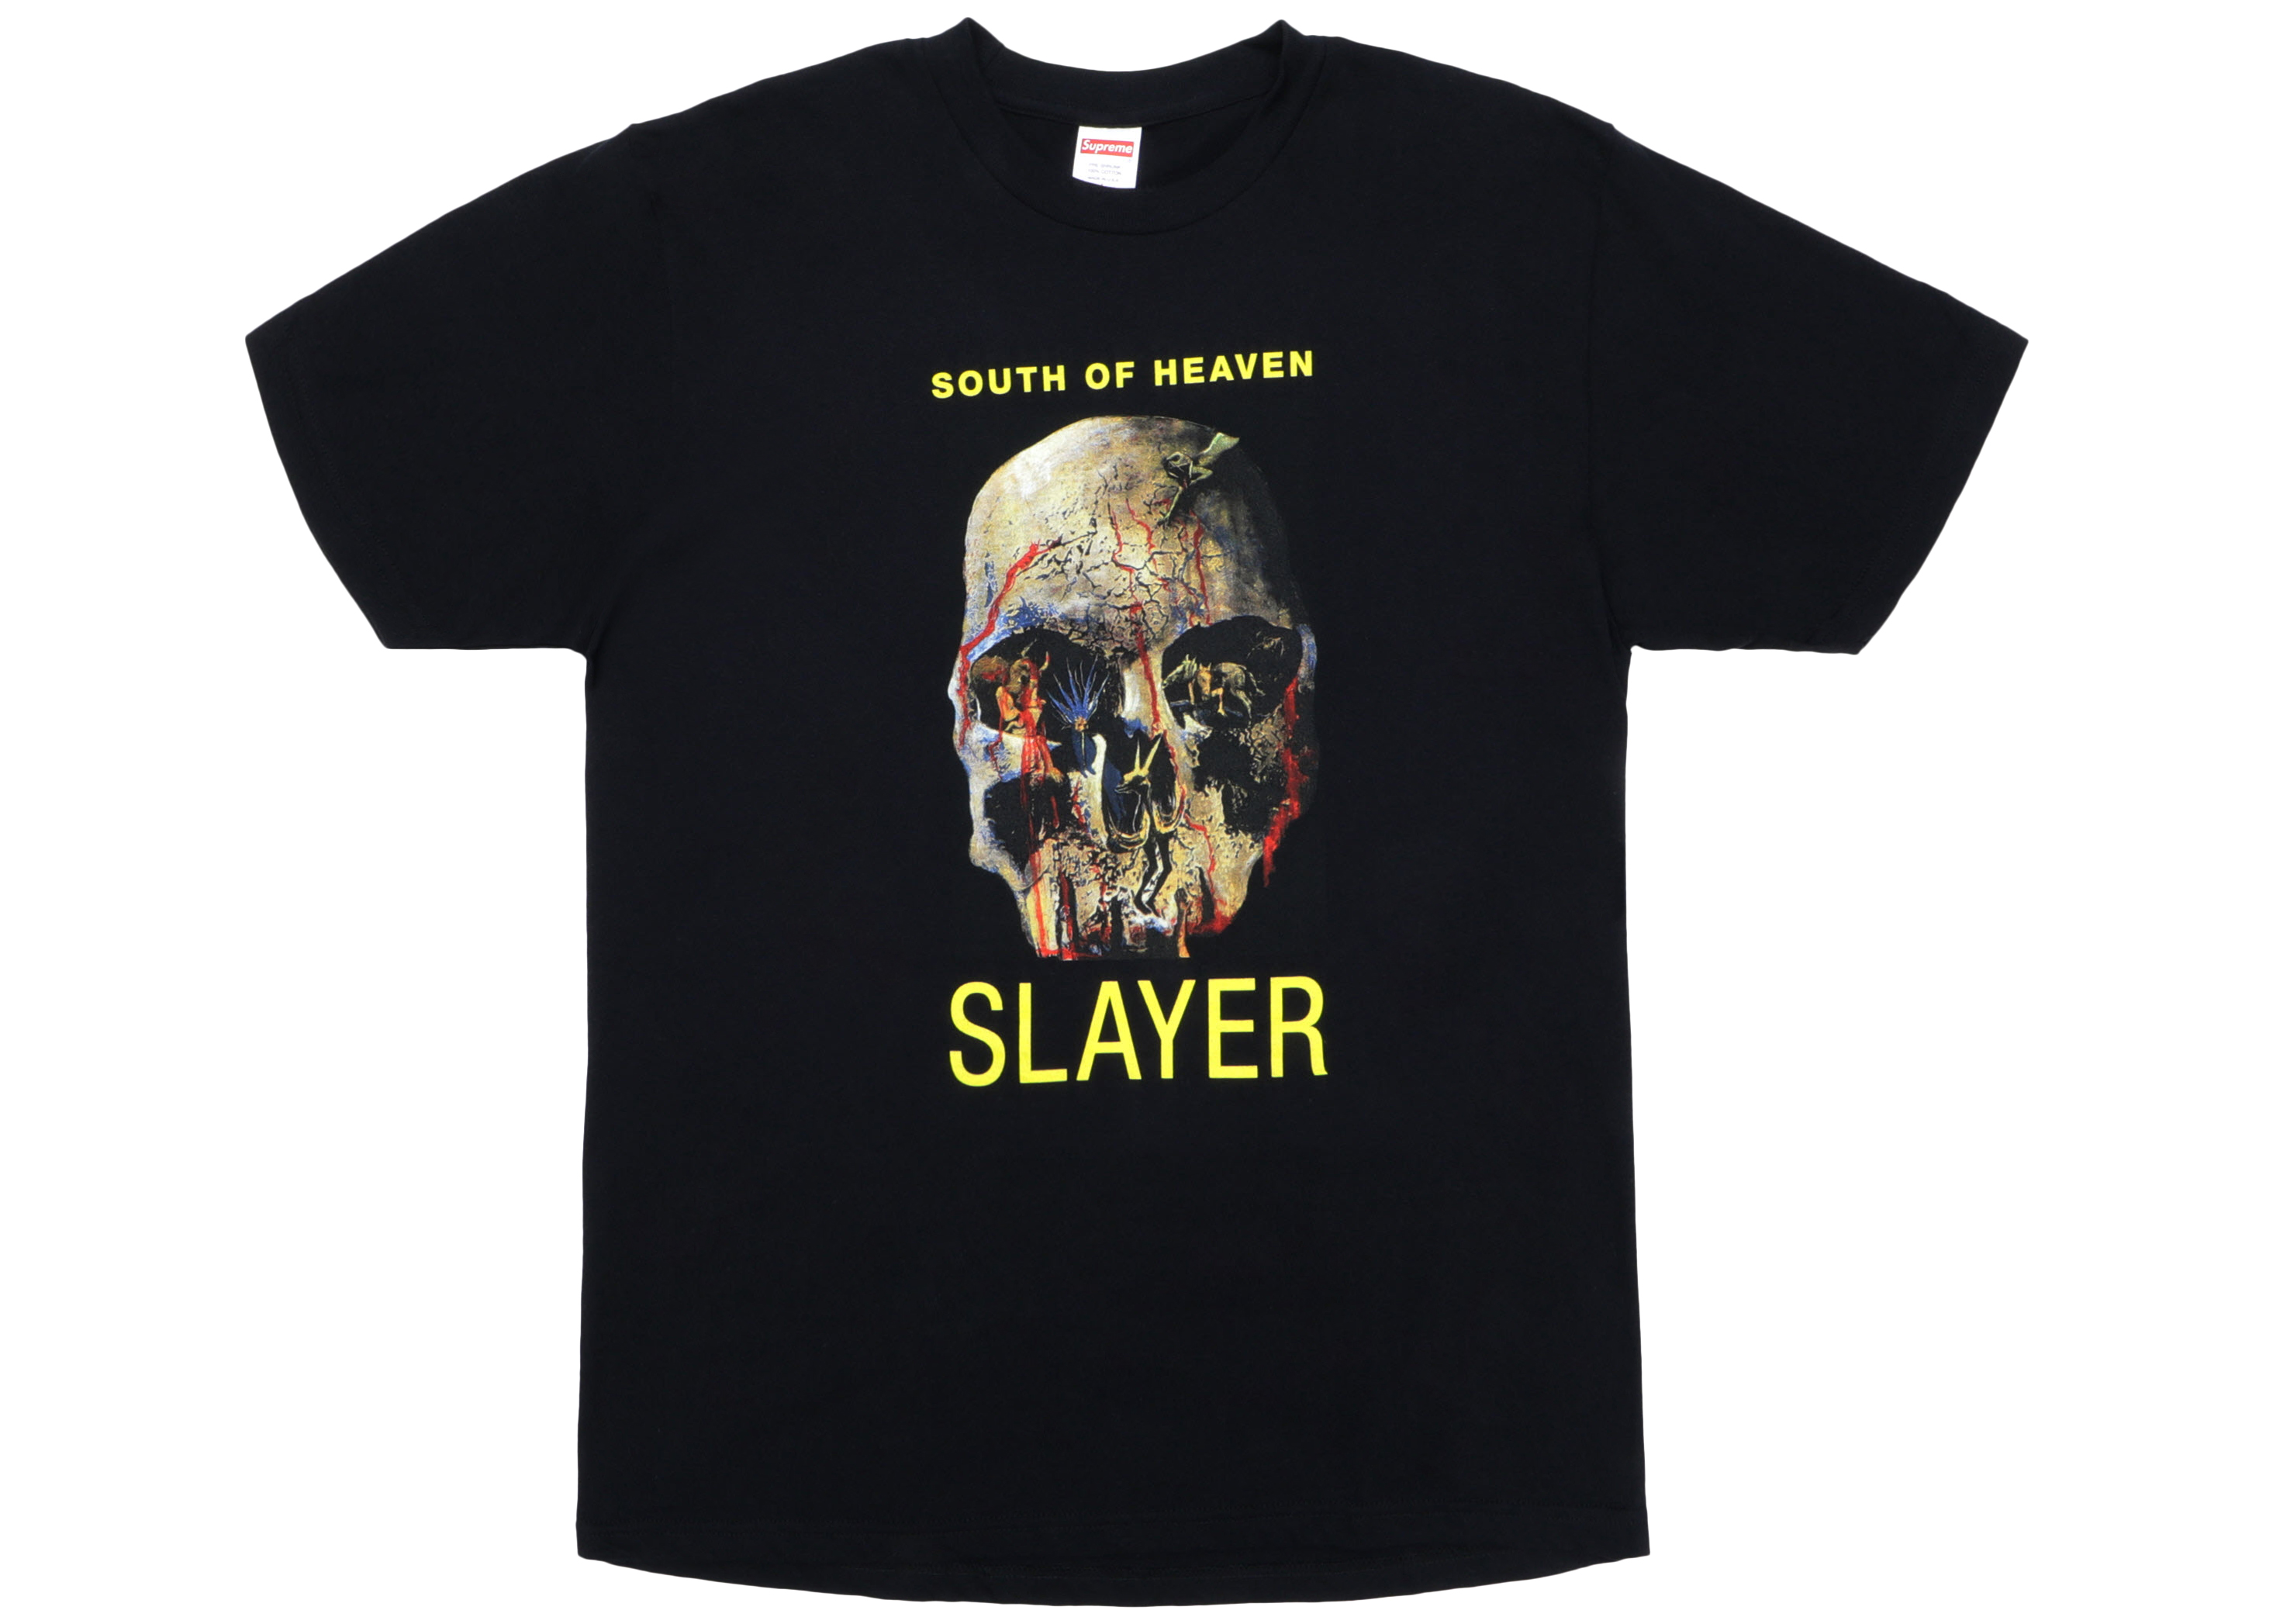 Supreme Slayer South of Heaven Tee Black Men's - FW16 - US